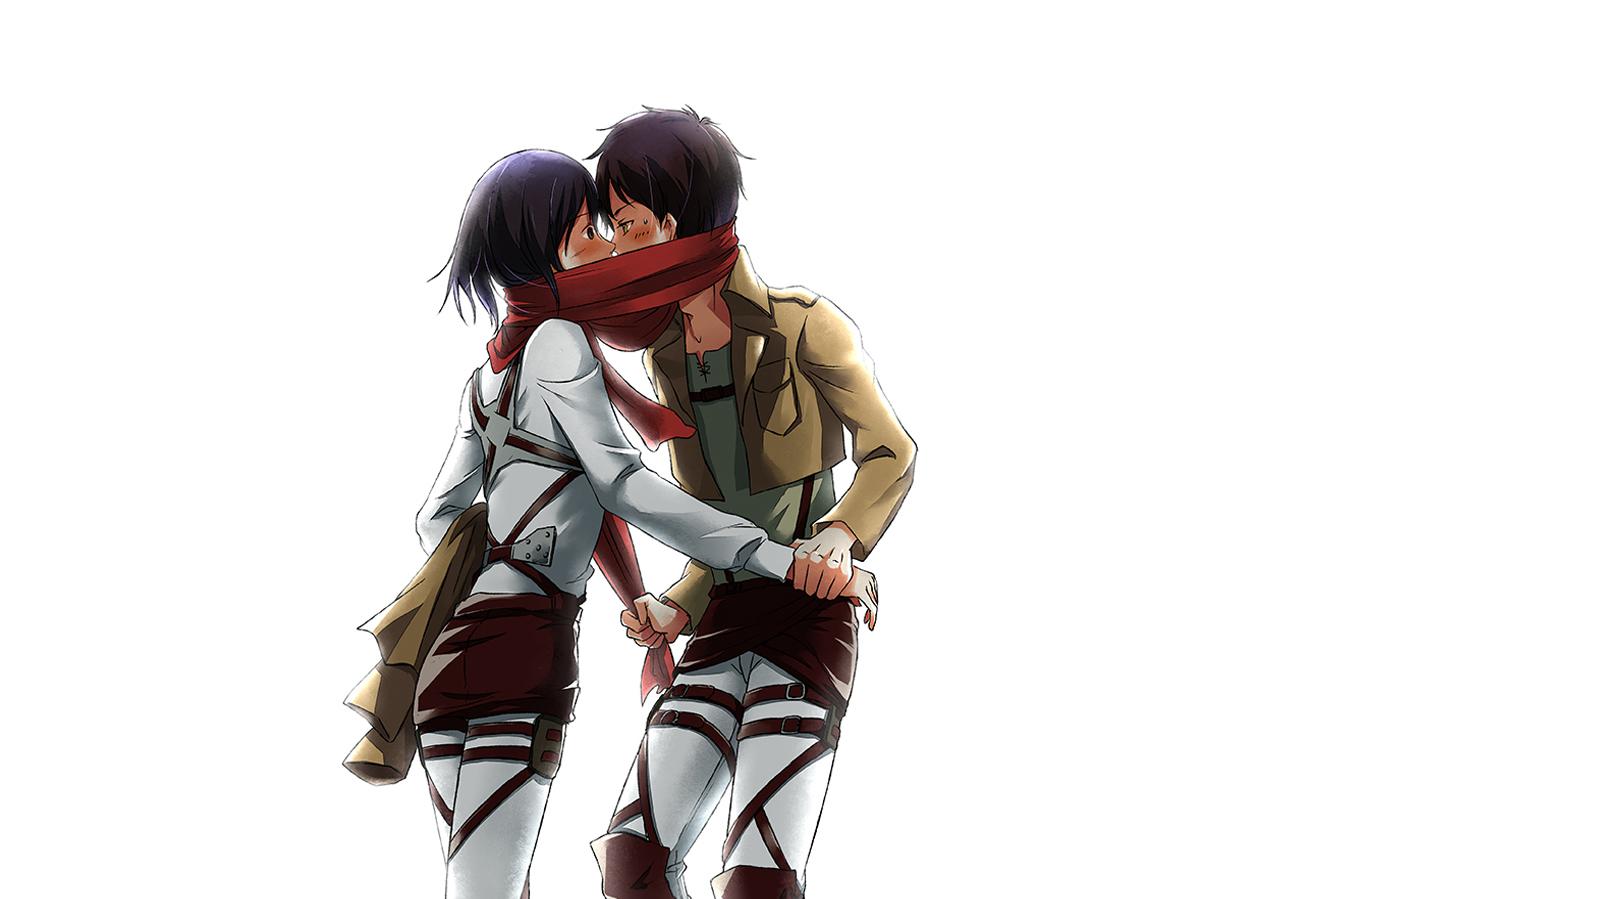 HD Wallpaper Mikasa Eren Kissing Sweet Couple